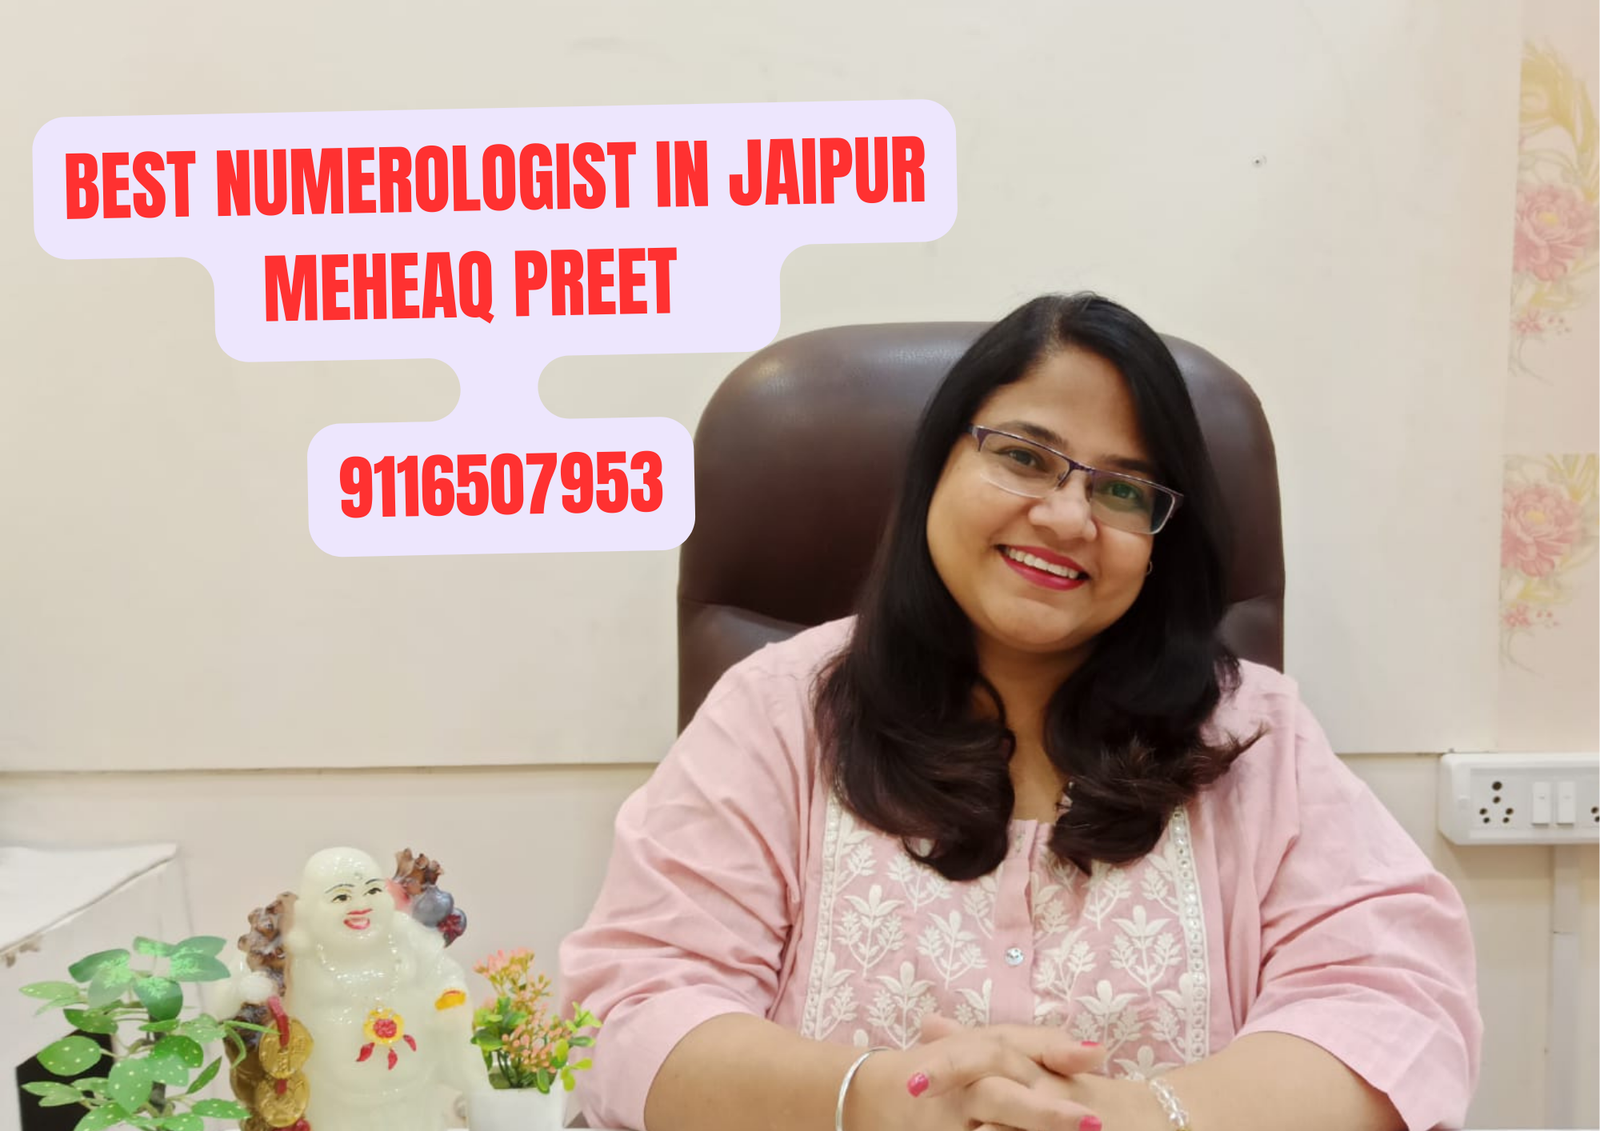 Best Numerologist in Jaipur